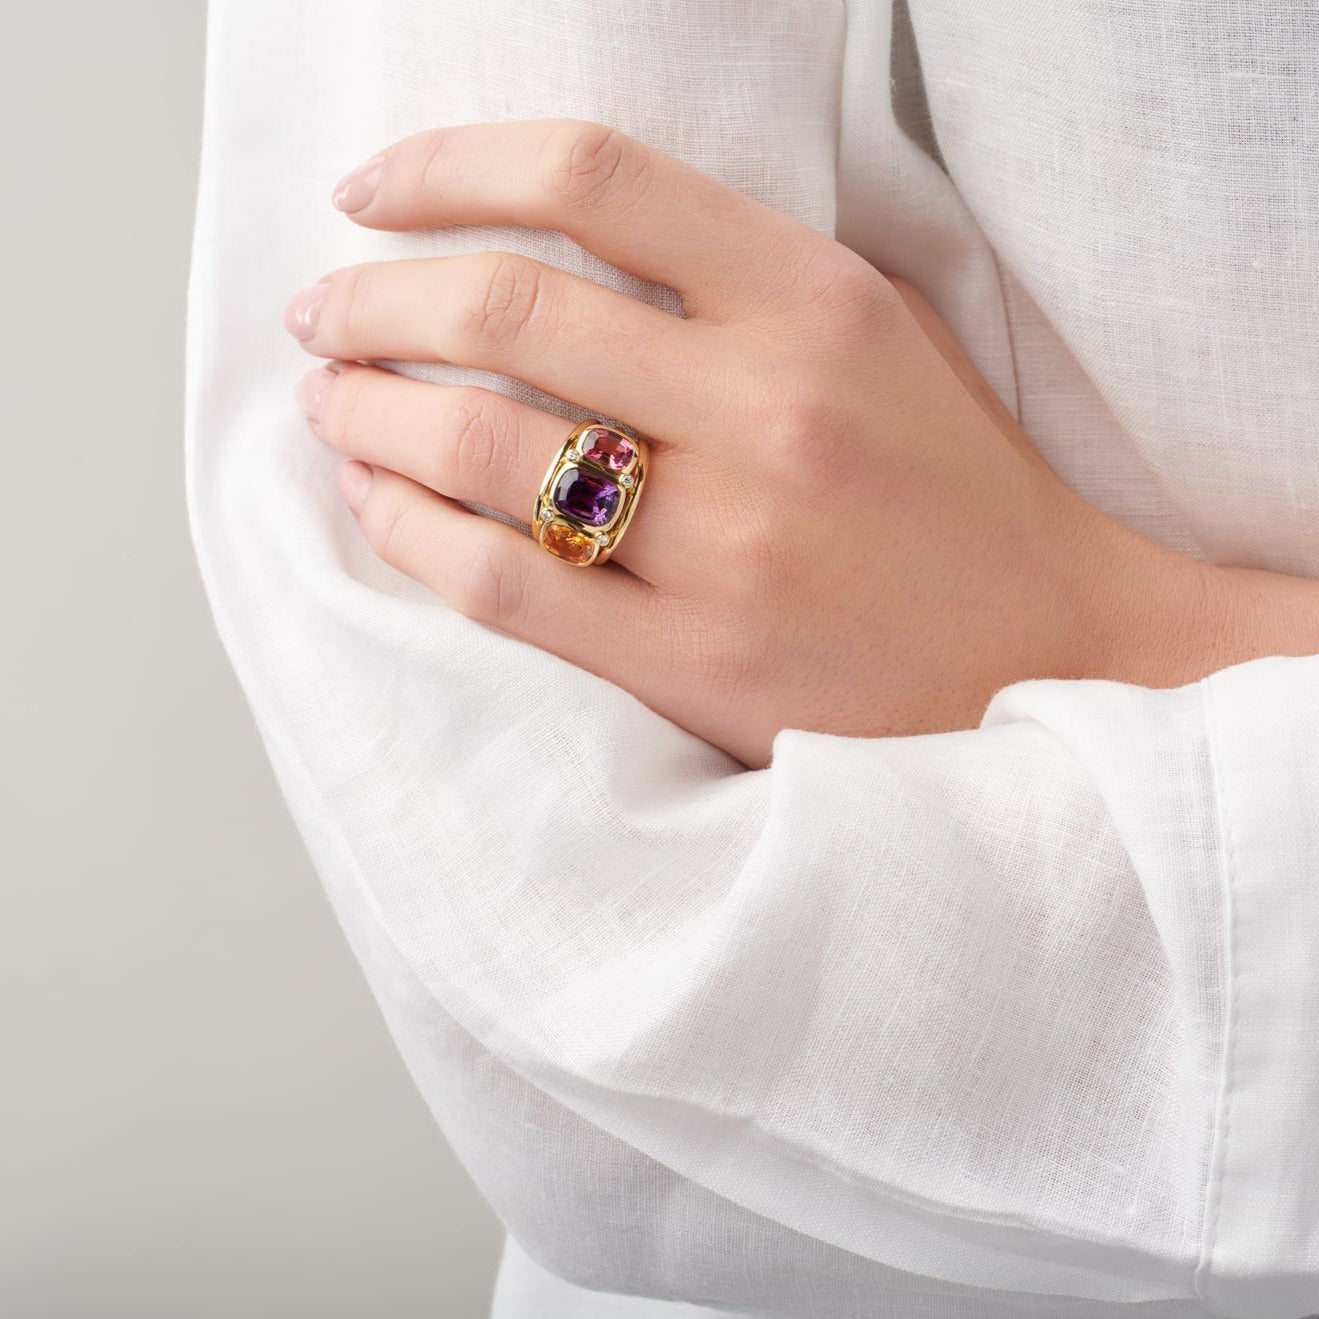 Ozymandias Ring 18ct Yellow Gold - Amethyst, Mandarin Garnet, Pink Tourmaline & Diamond Ring